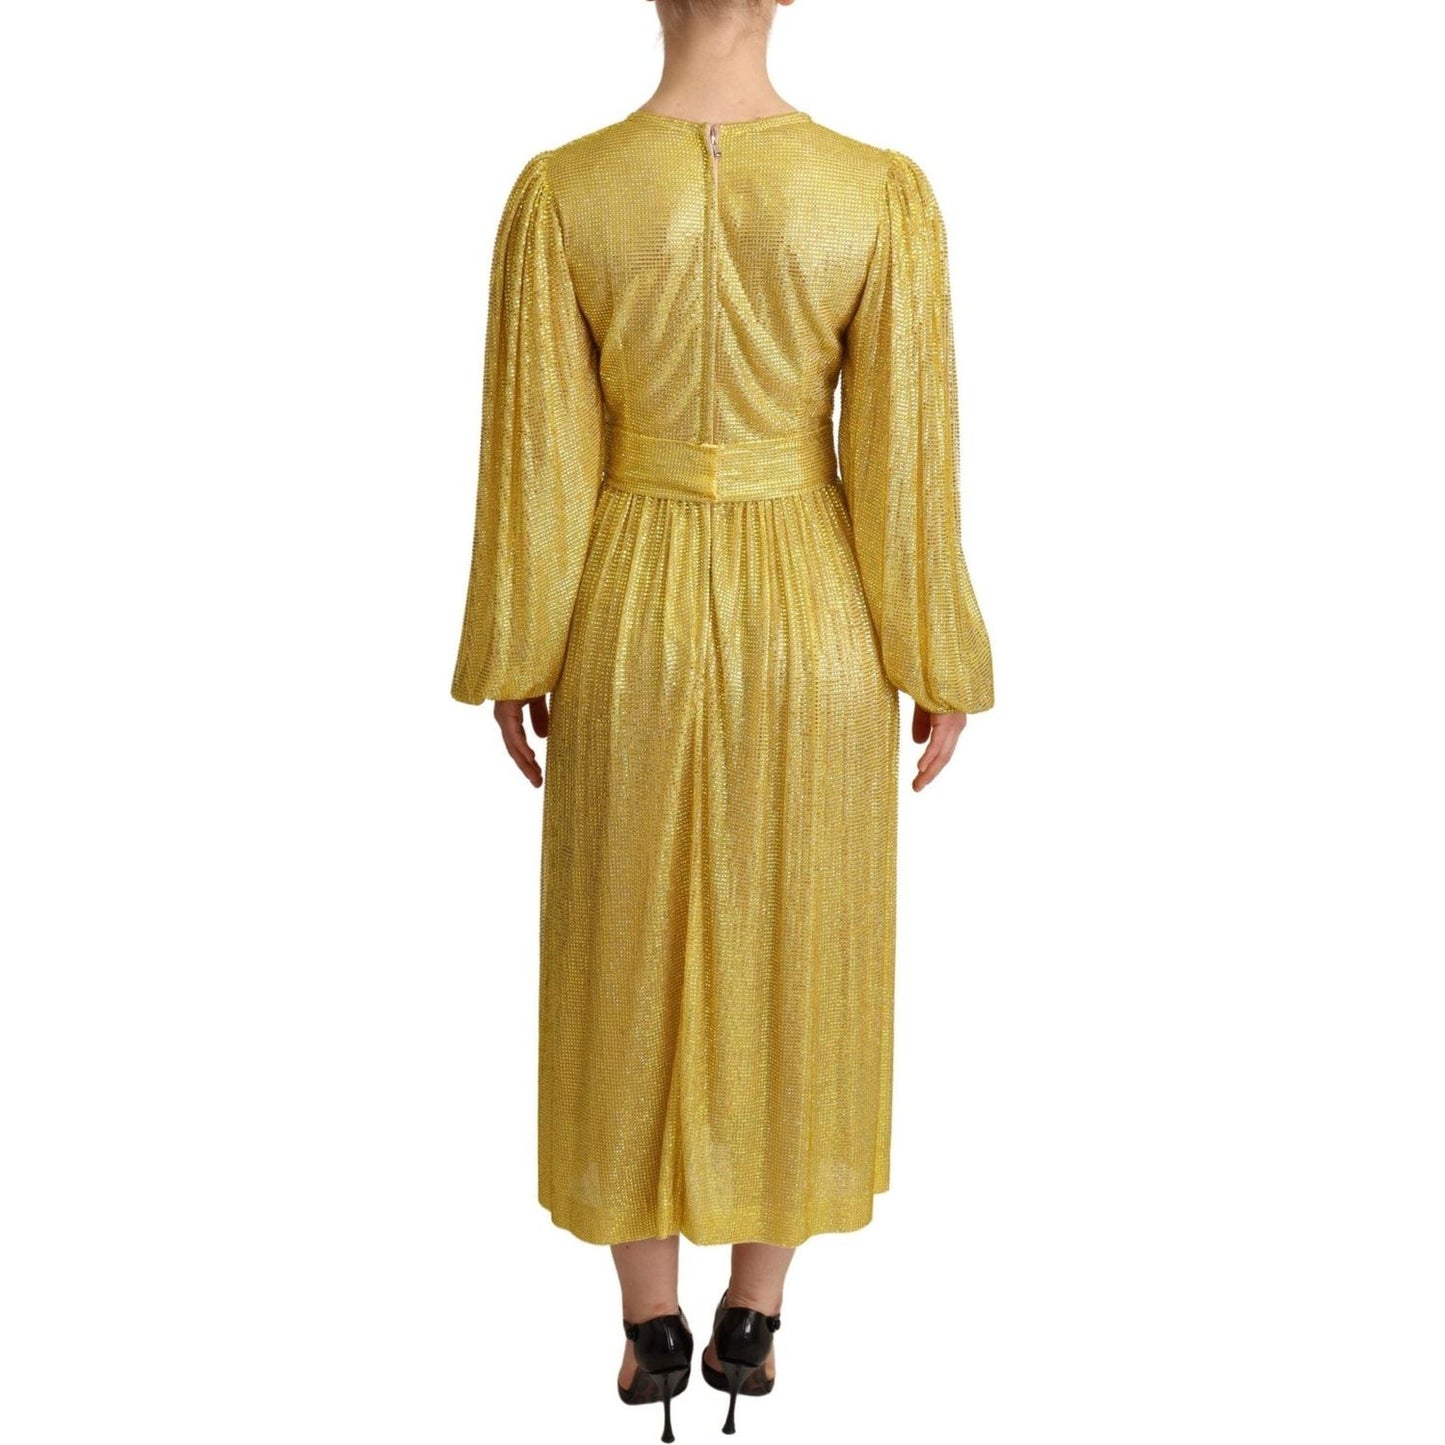 Dolce & Gabbana Crystal Embellished Pleated Maxi Dress WOMAN DRESSES yellow-crystal-mesh-pleated-maxi-dress IMG_0622-scaled-2b576d91-0e8.jpg